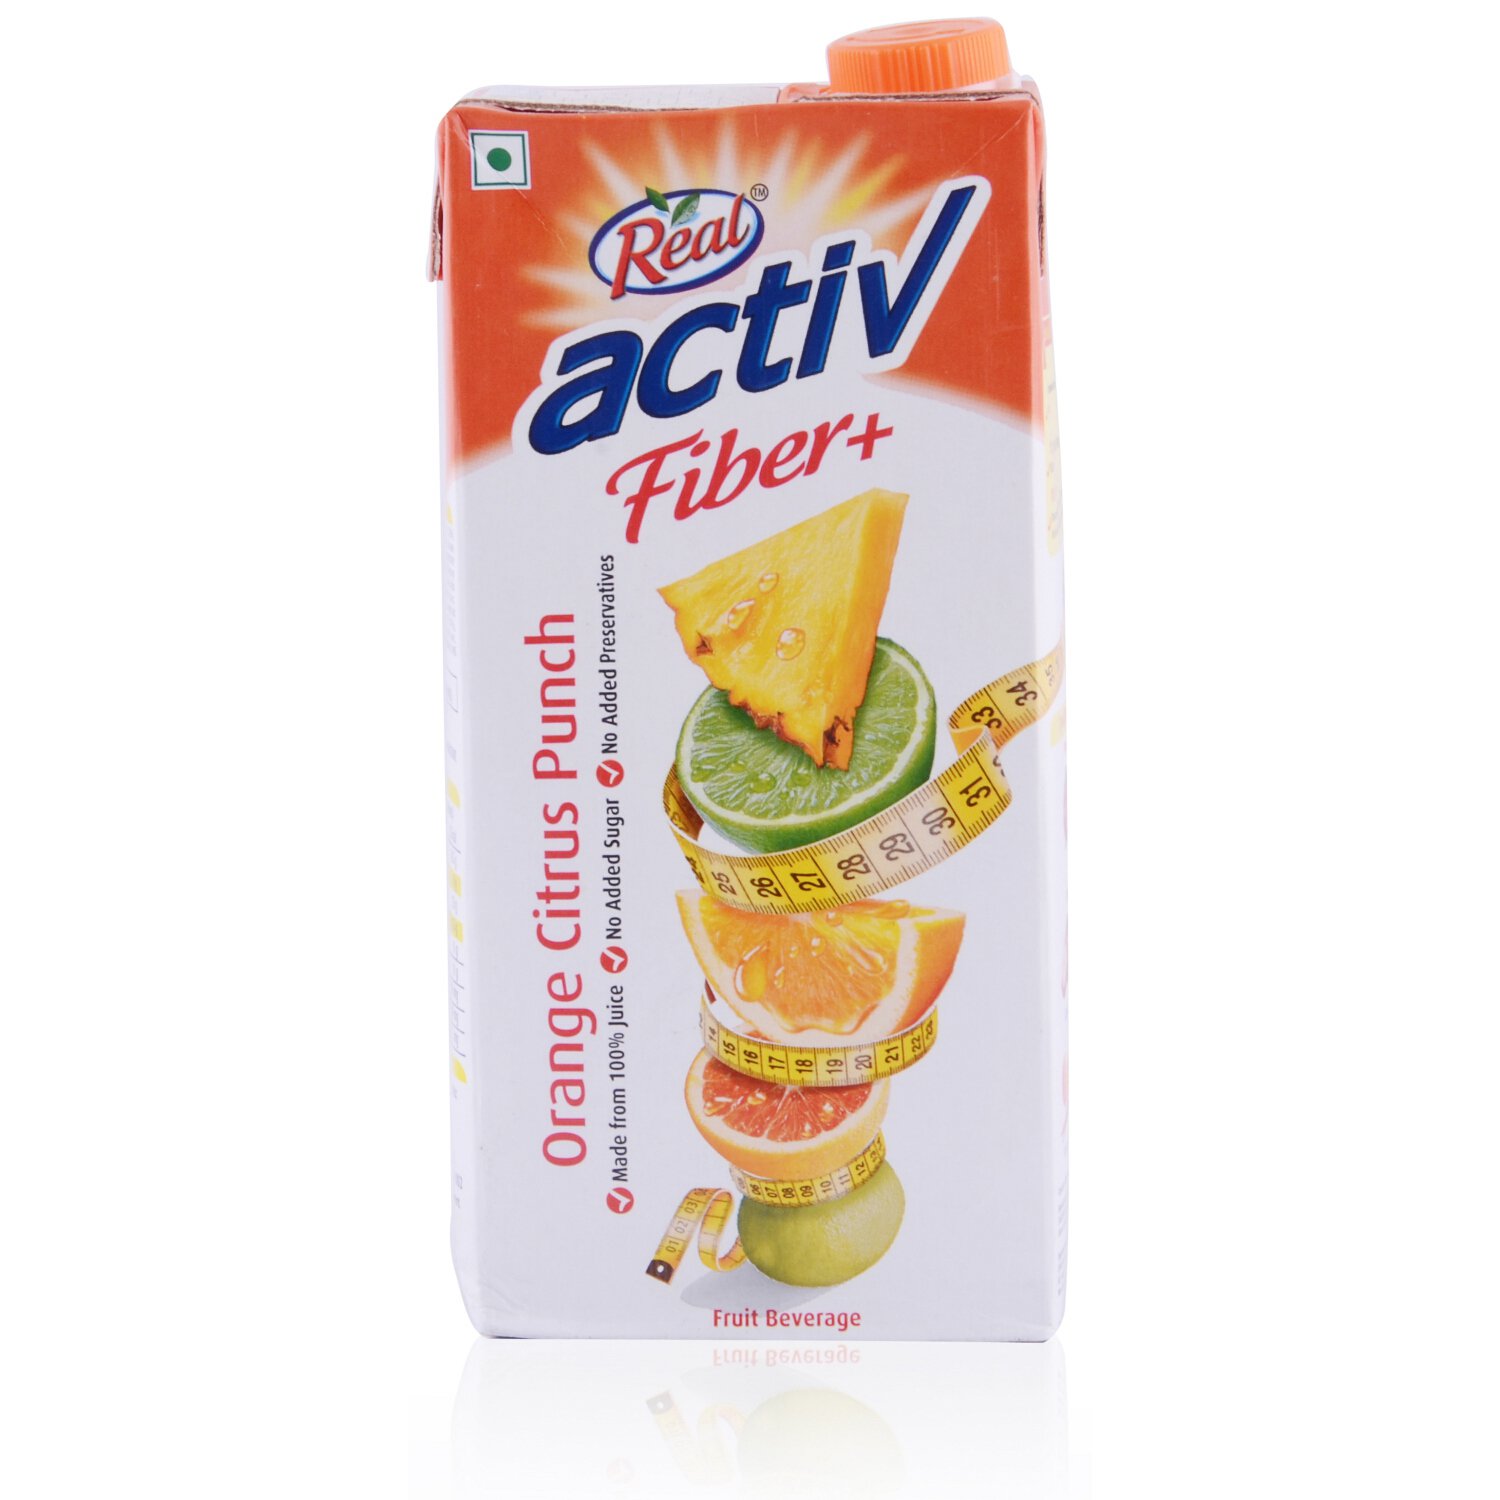 Real Activ Fiber Orange Citrus Punch